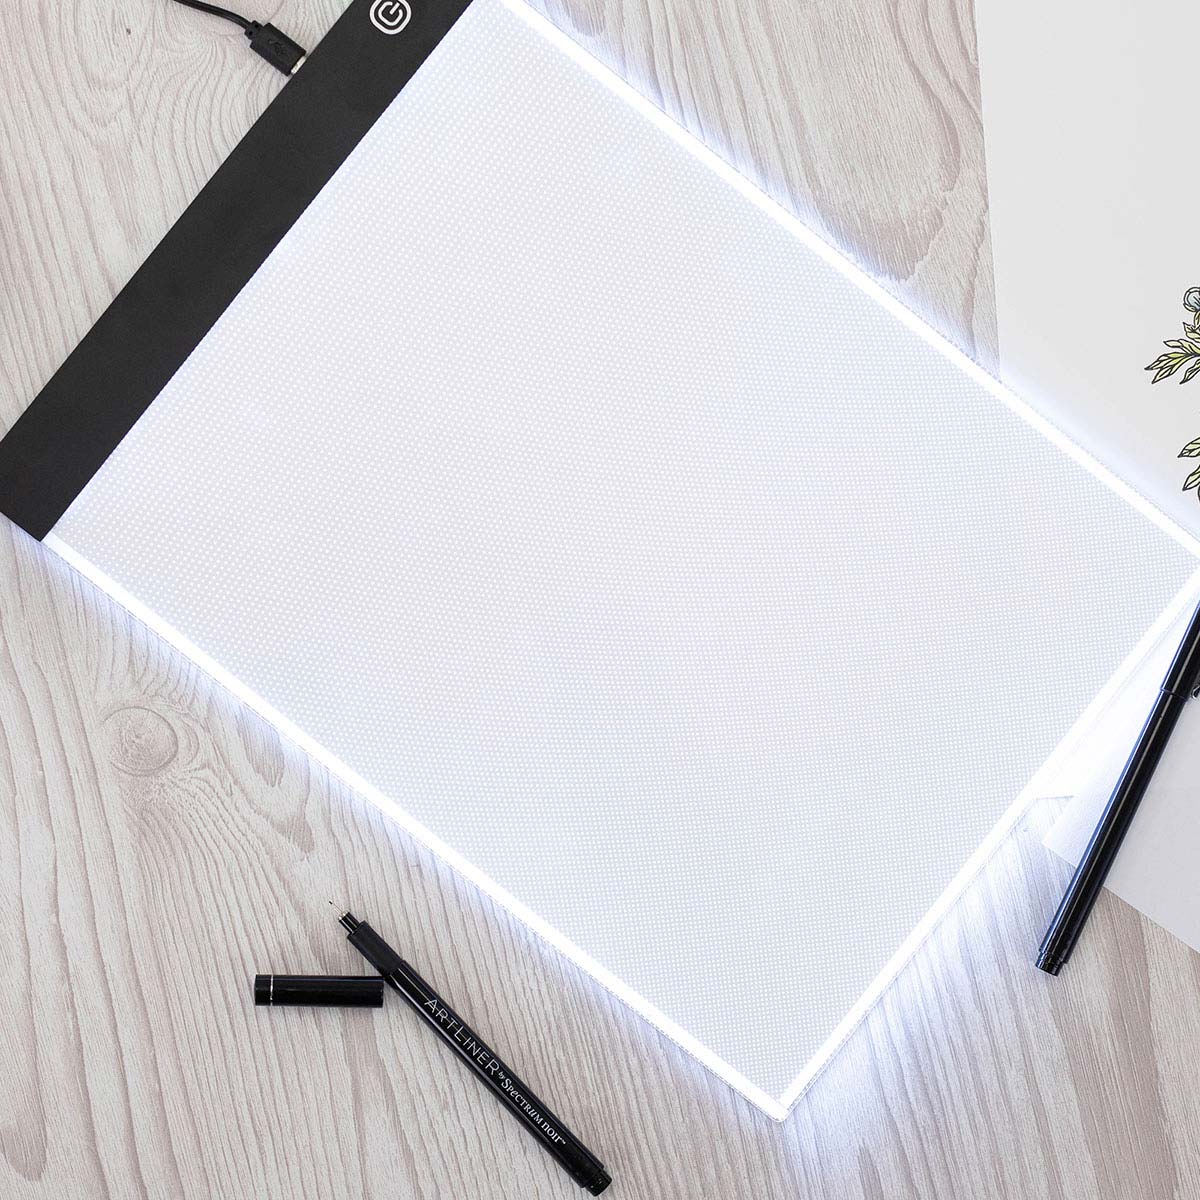 Crafter's Companion - Light Light Pad/Light Box a LED